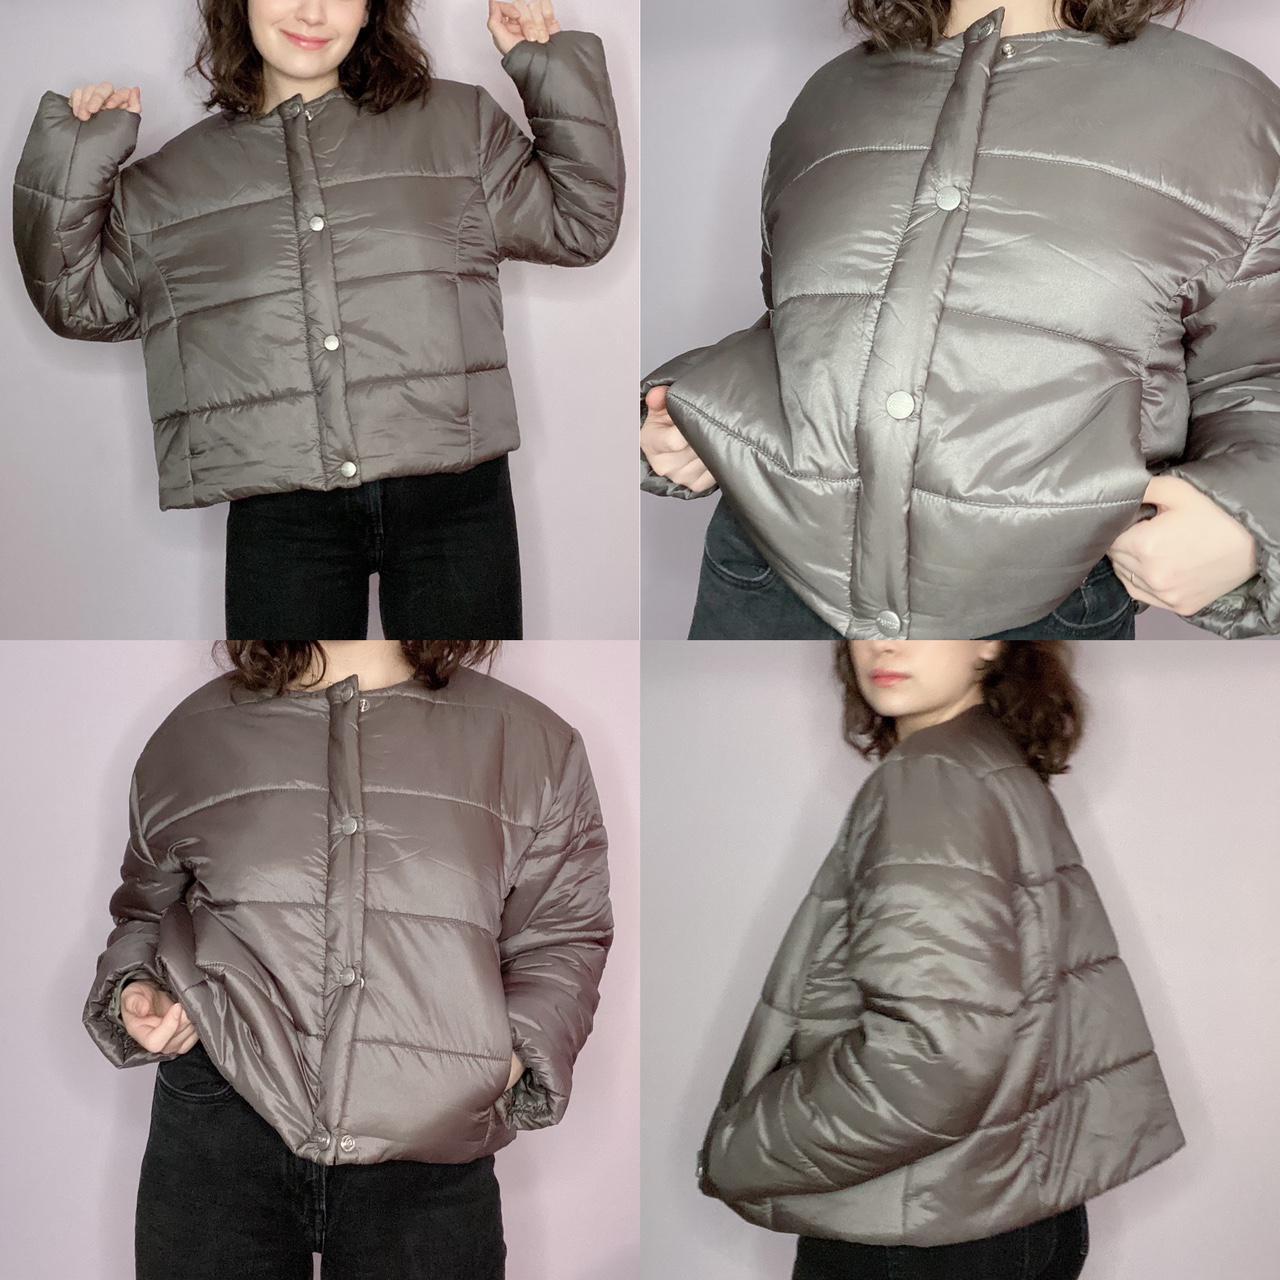 Product Image 3 - grey puffa brand jacket ❄️☁️🌨

✿